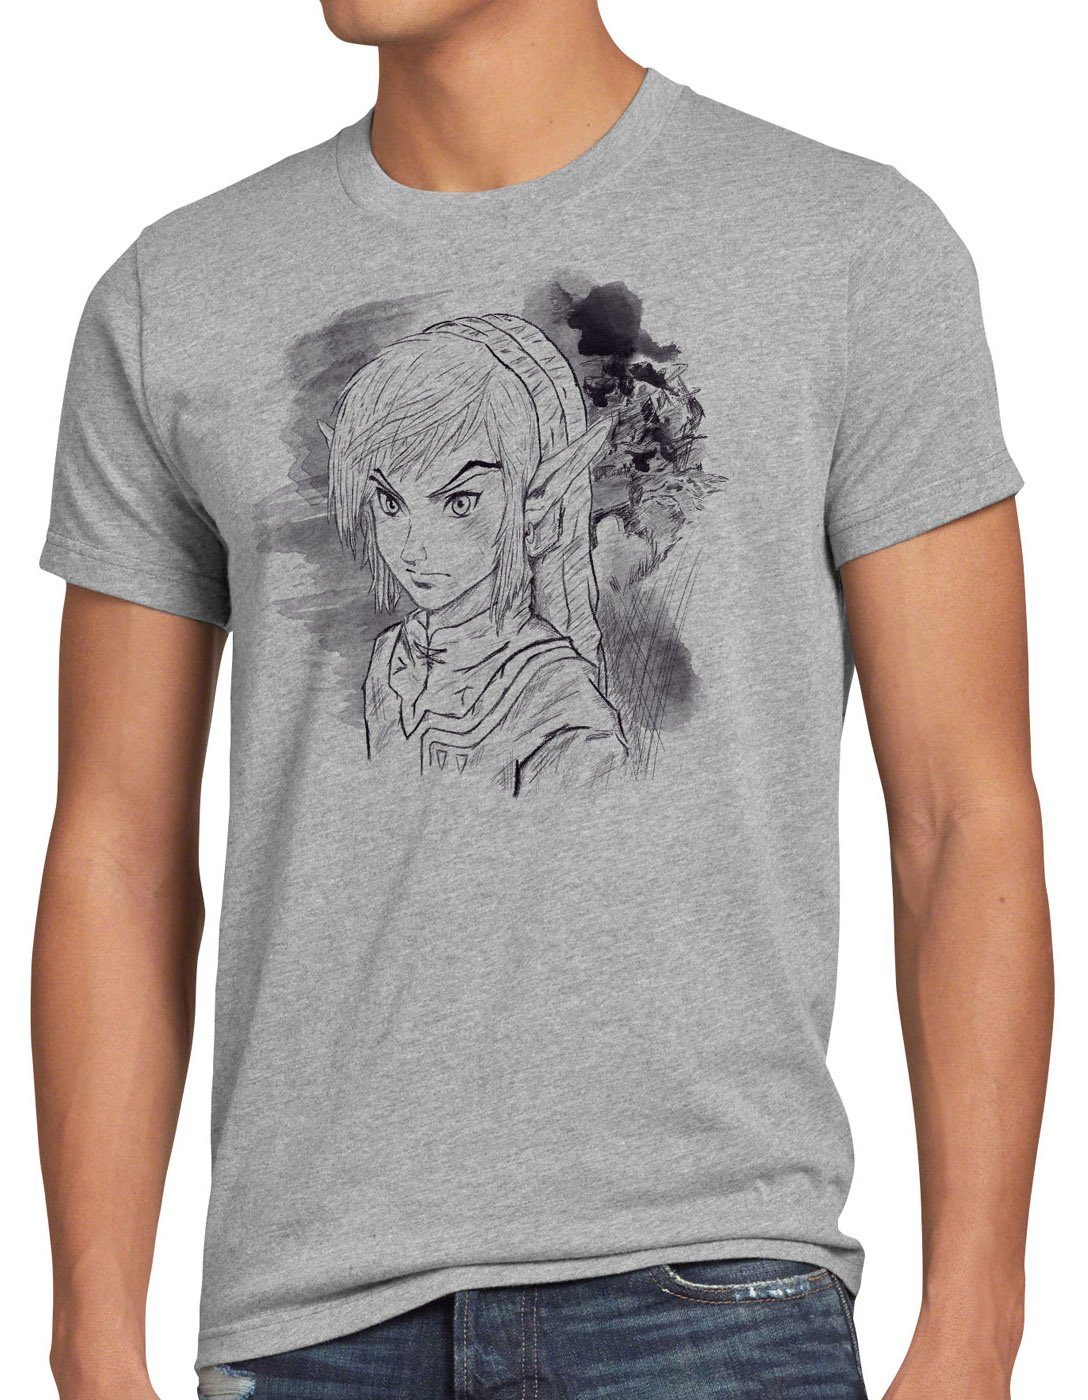 grau gamer style3 Print-Shirt zelda switch Herren game spiel hyrule boy wild Legend meliert Link amiibo T-Shirt